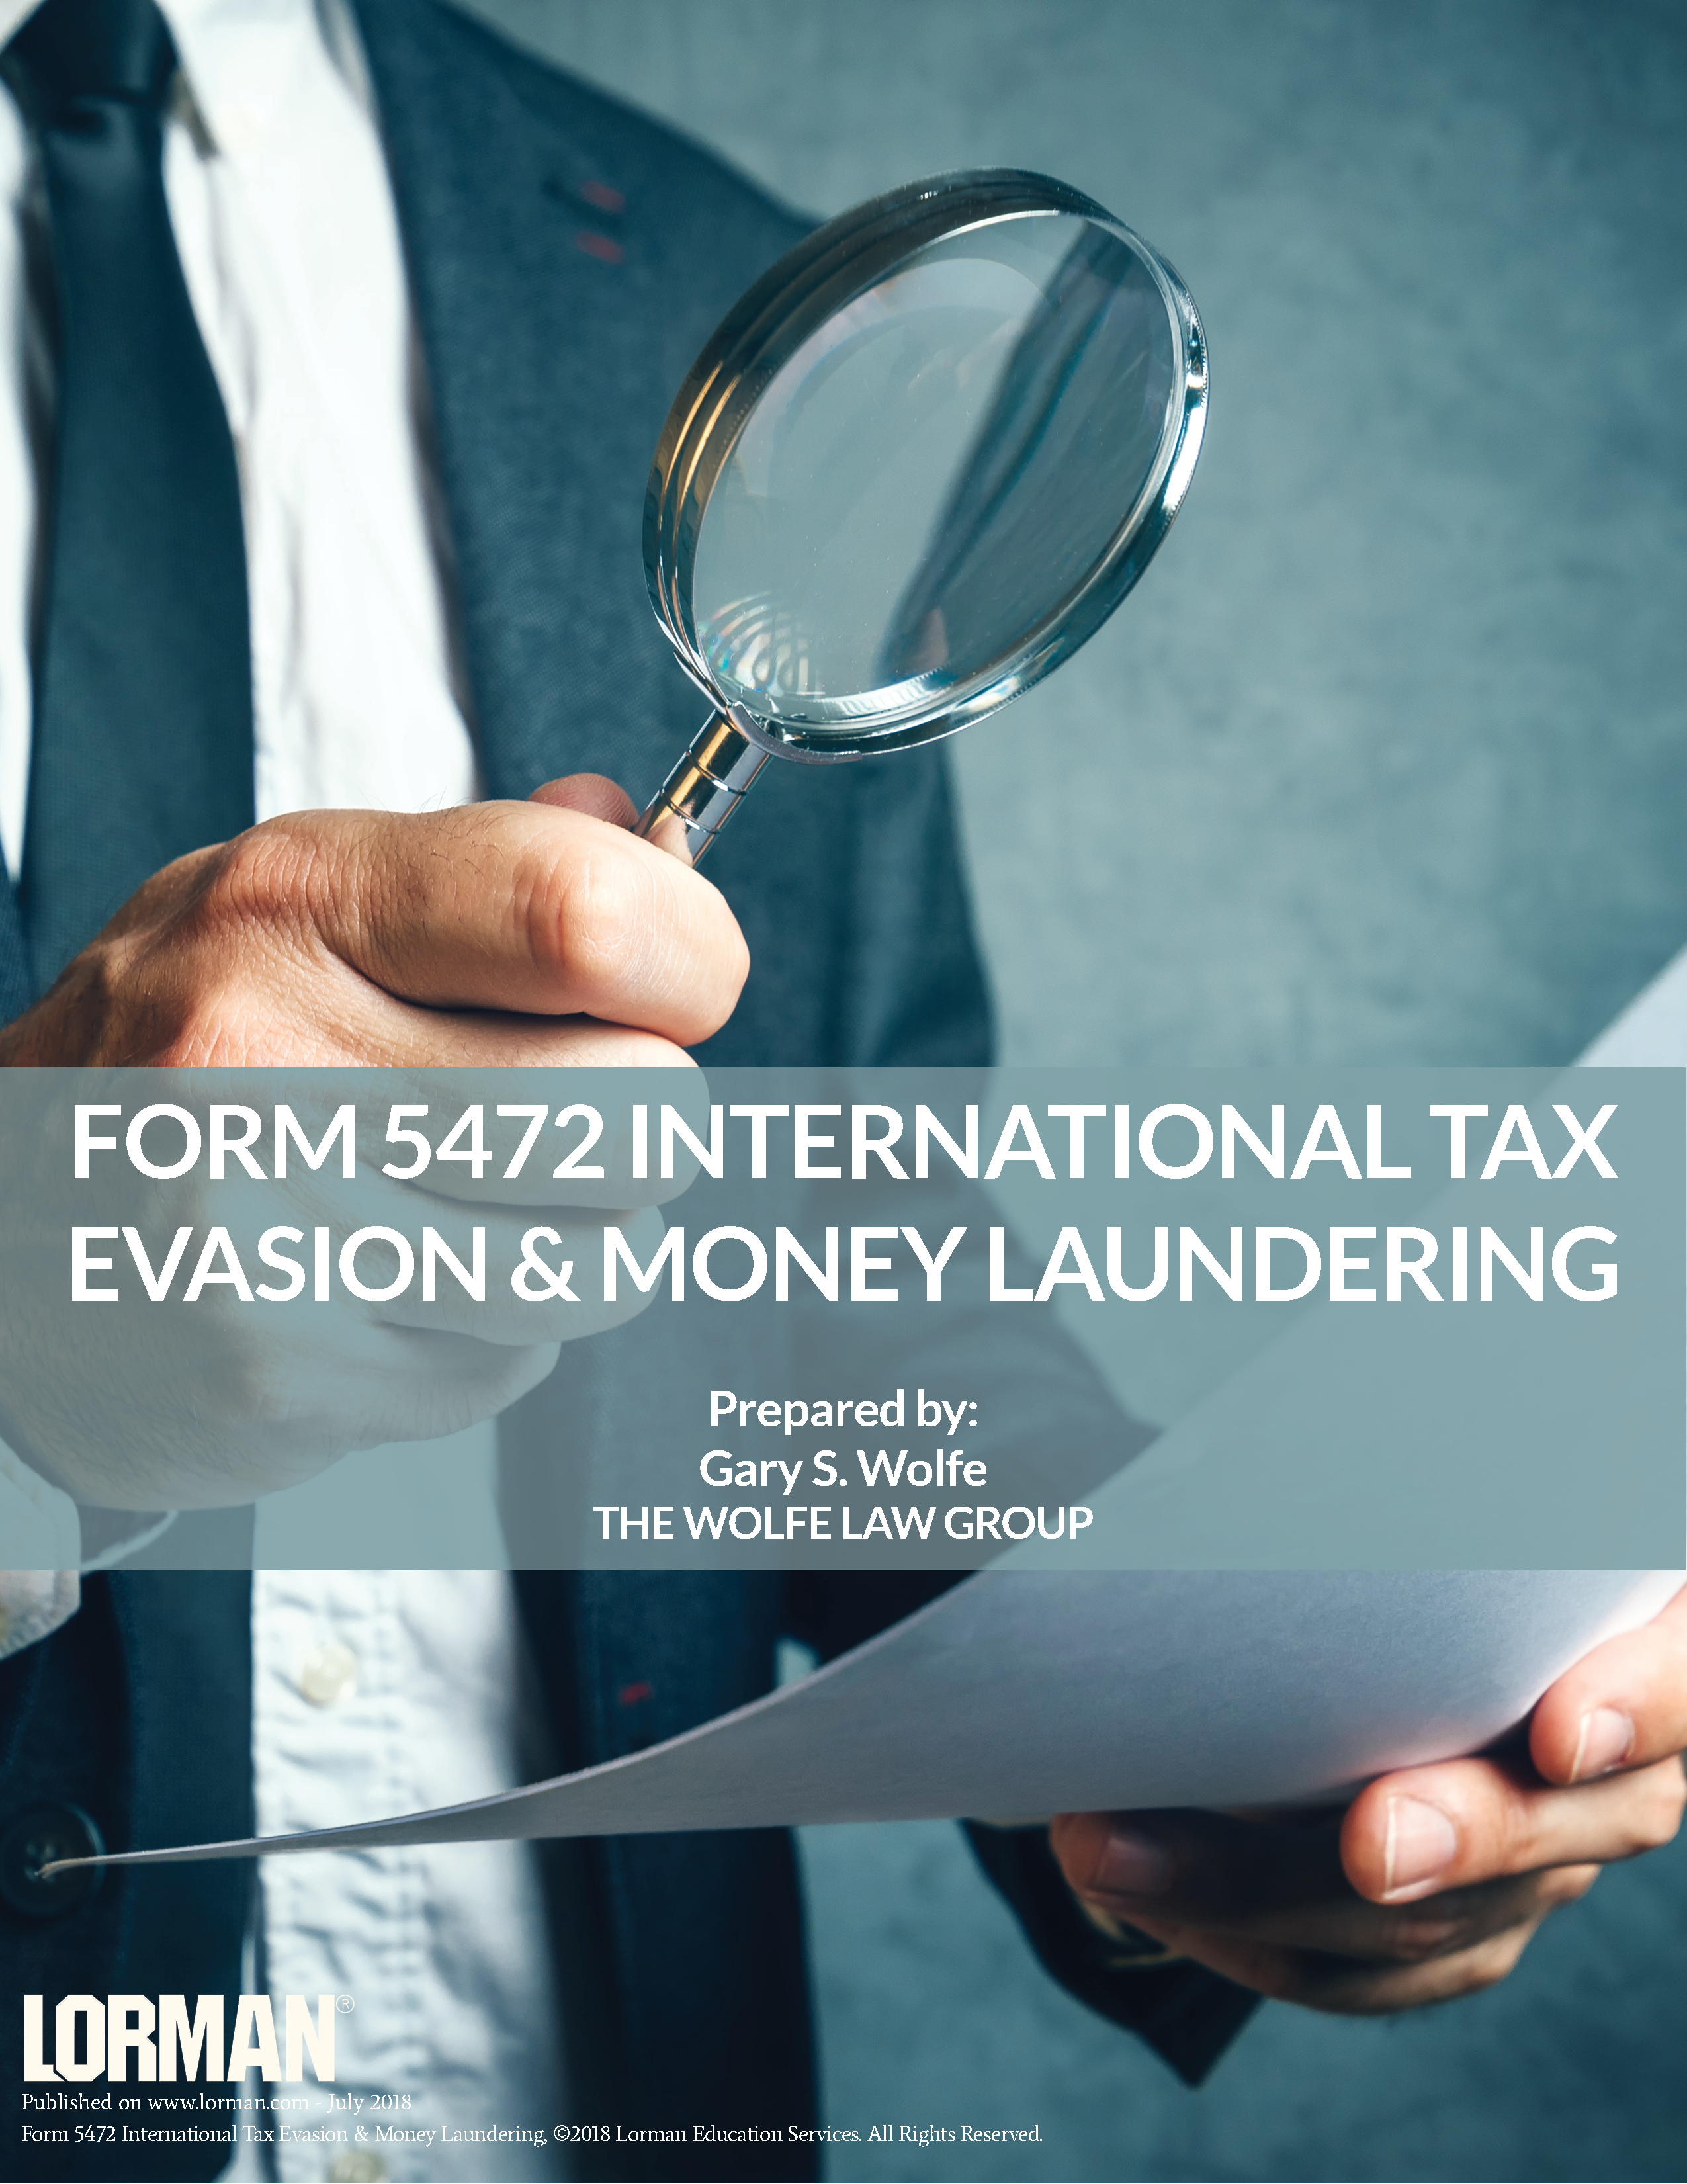 Form 5472 International Tax Evasion & Money Laundering